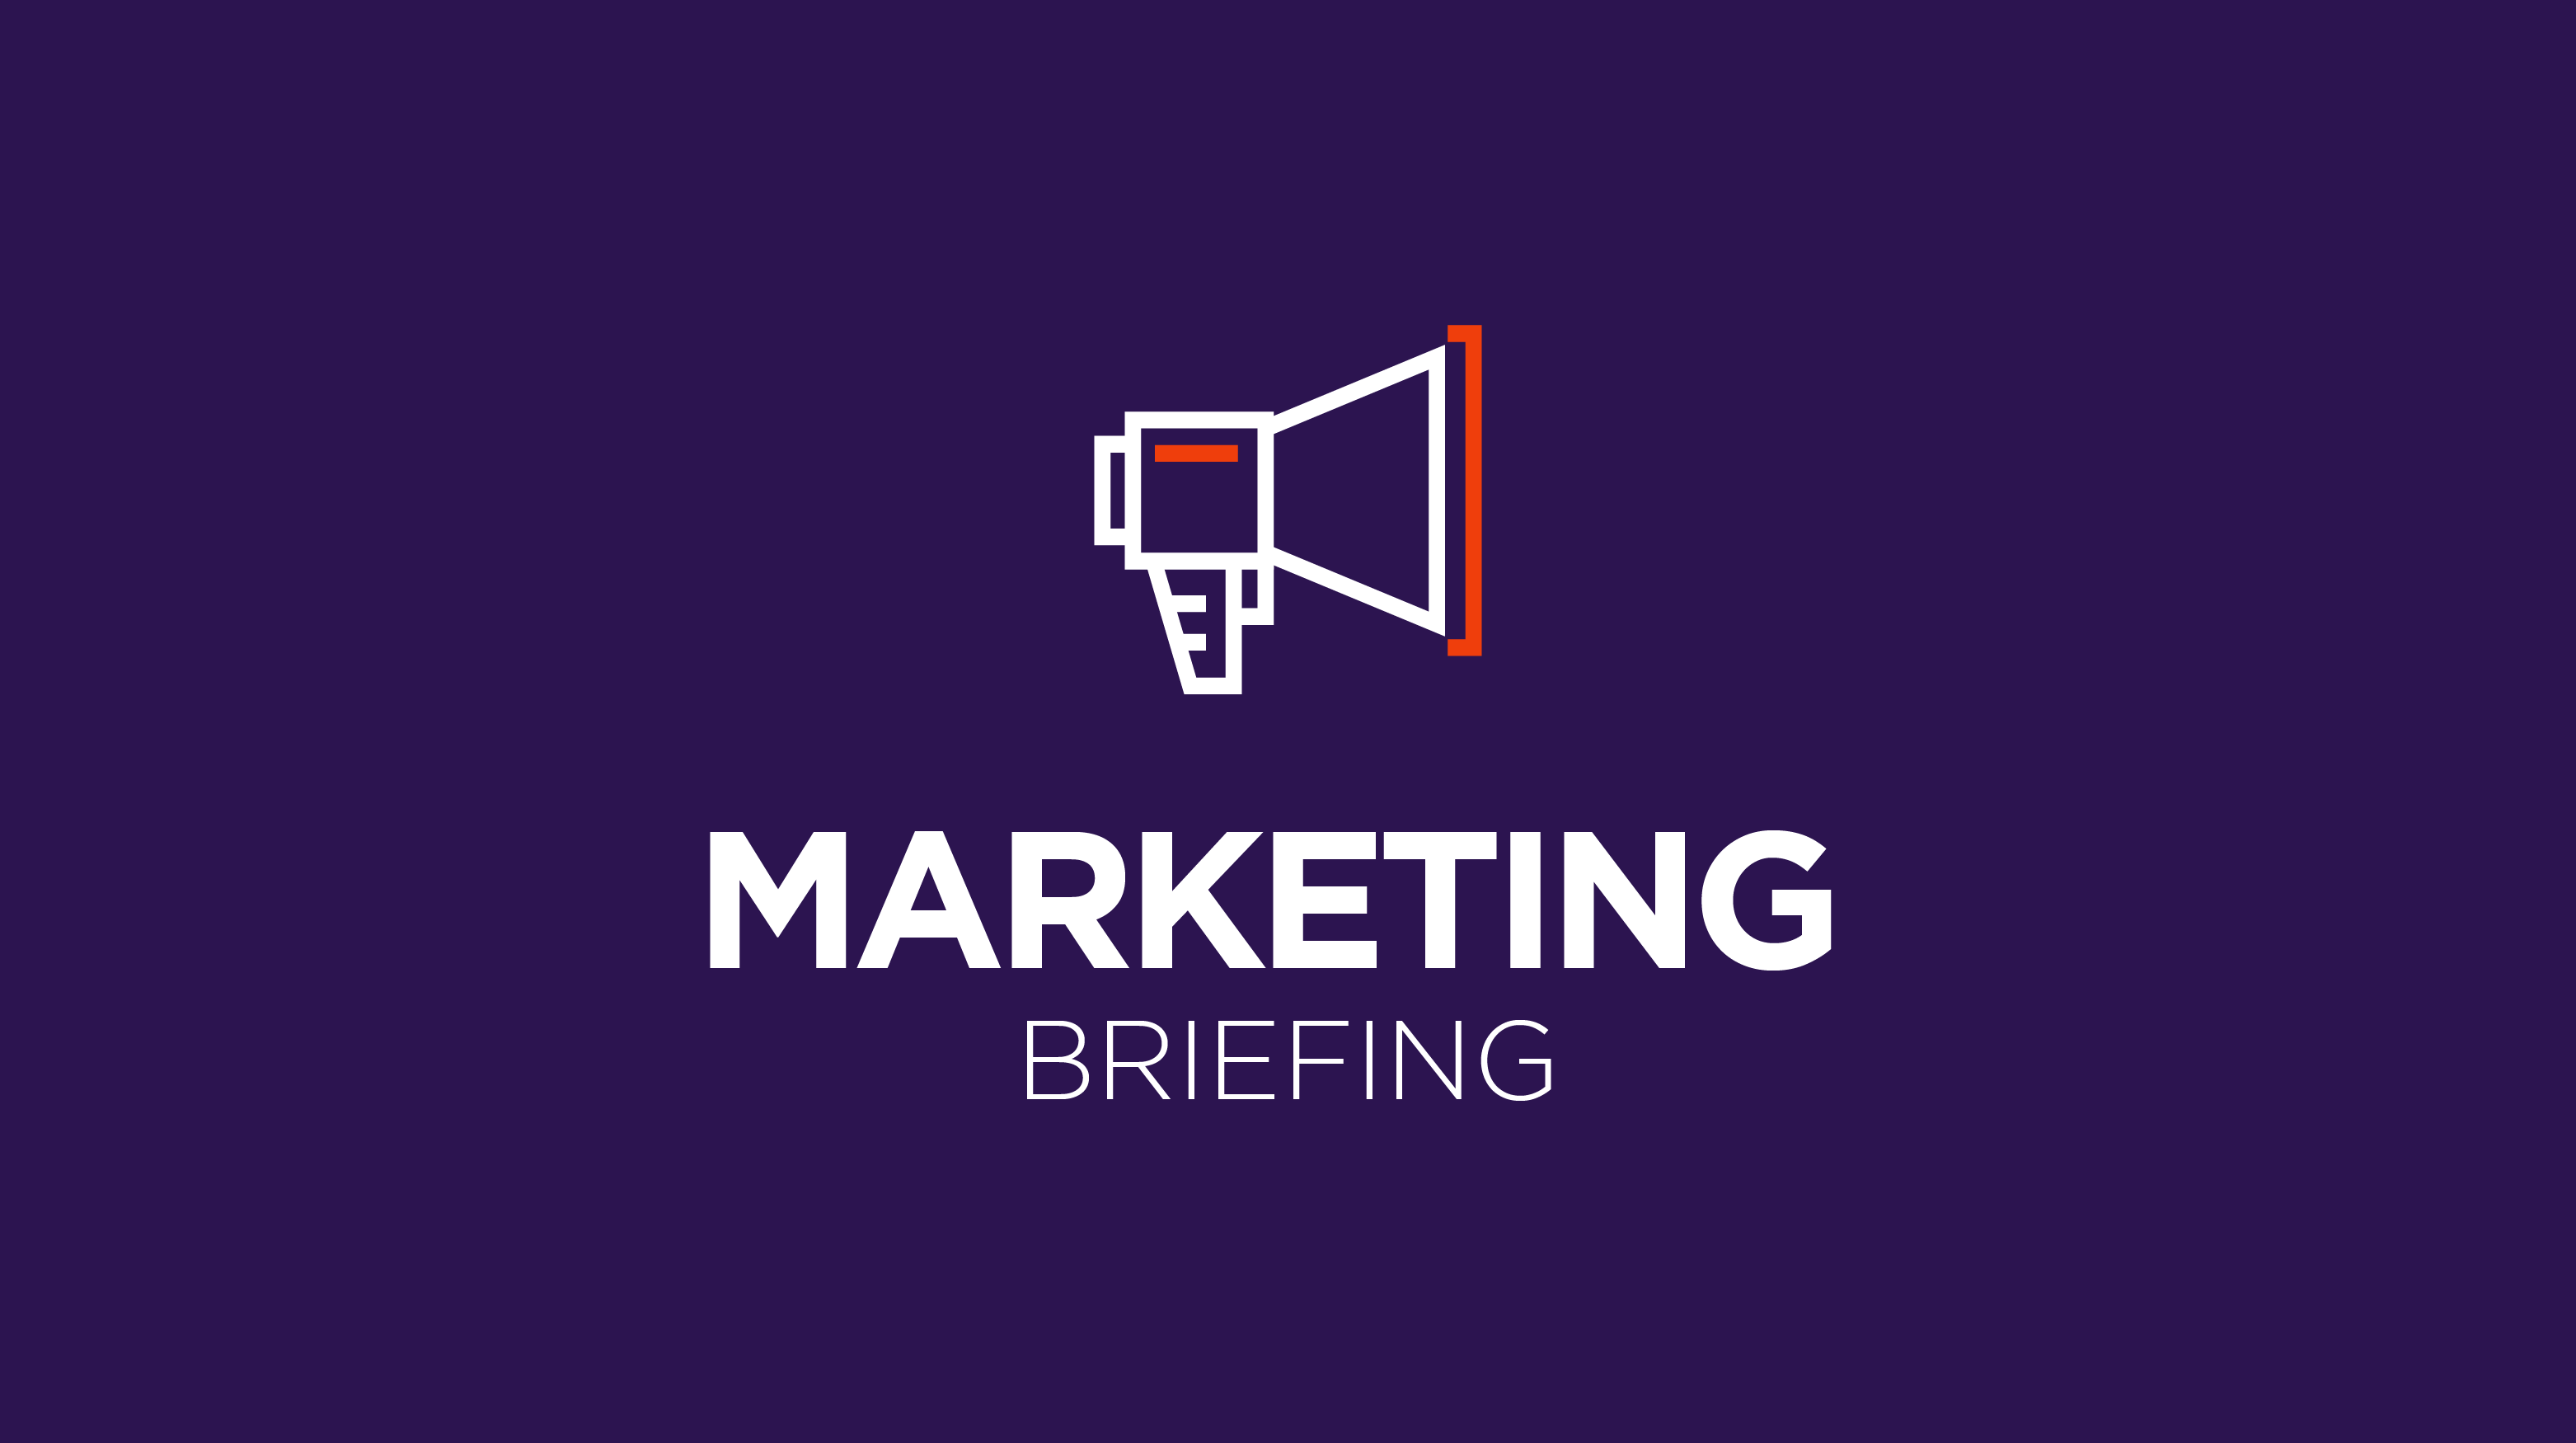 Marketing Briefing: The ‘Crypto’ Bowl is around the corner